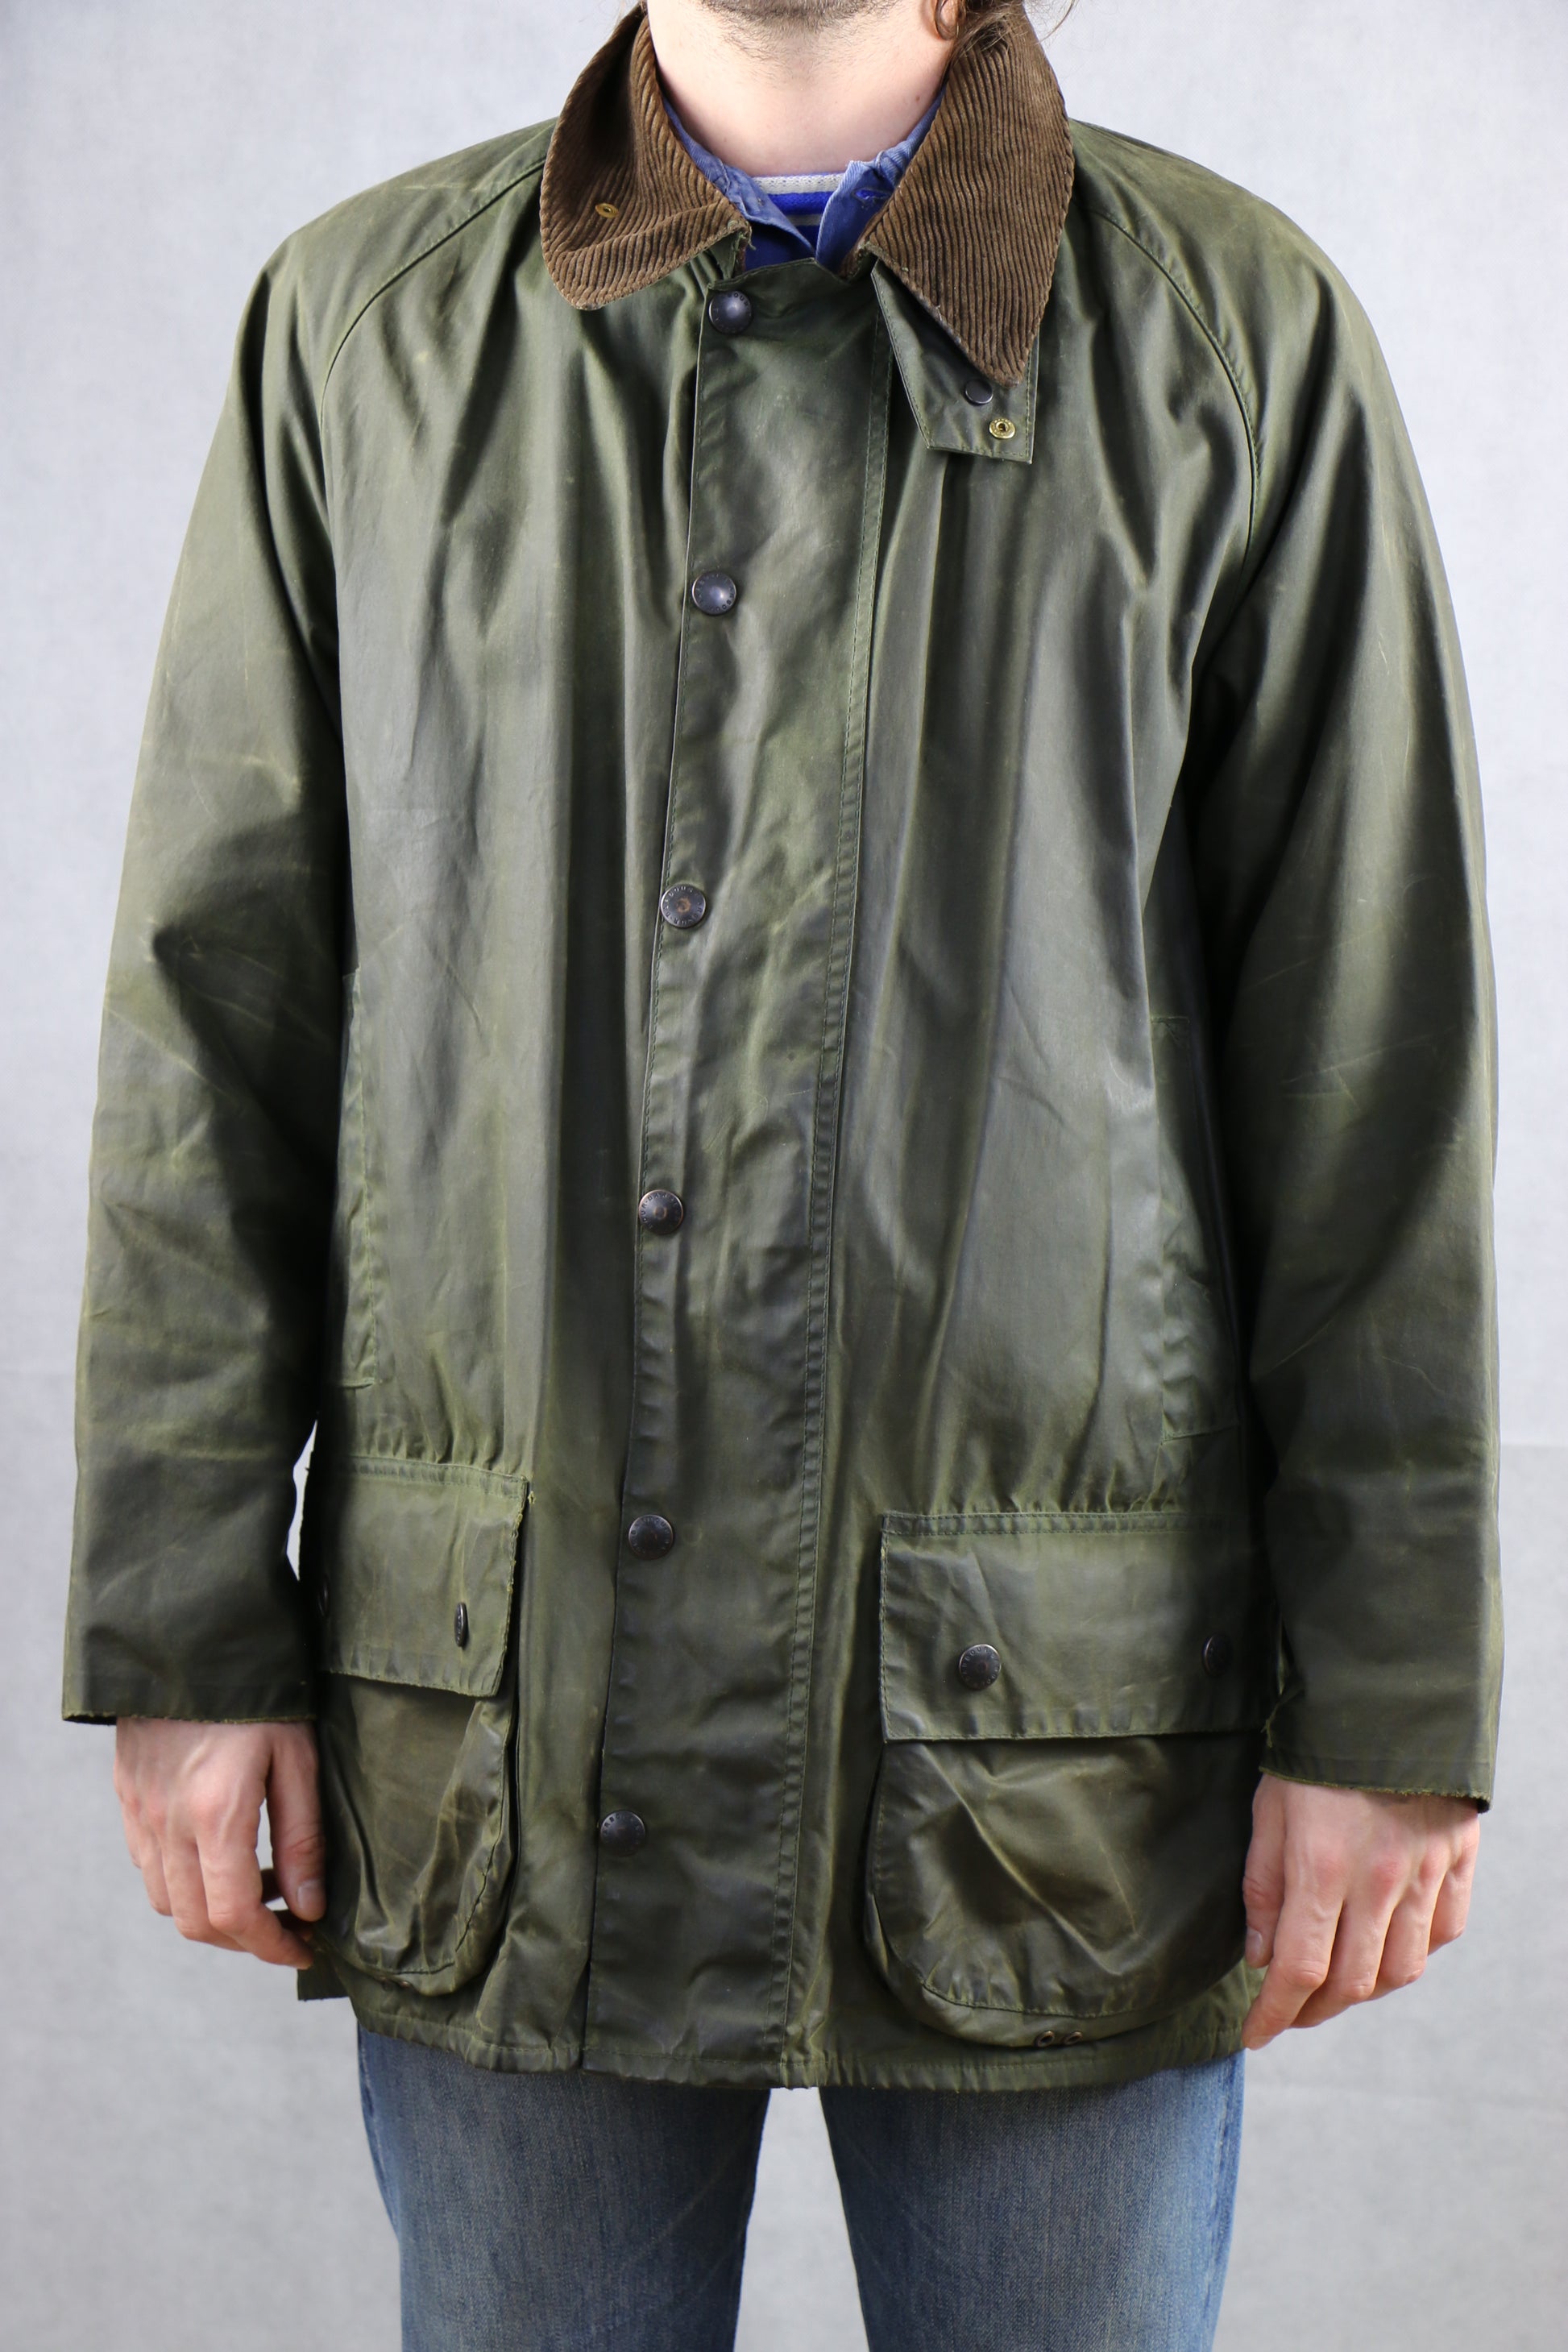 Barbour Beaufort C46/117CM Wax Jacket - vintage clothing clochard92.com